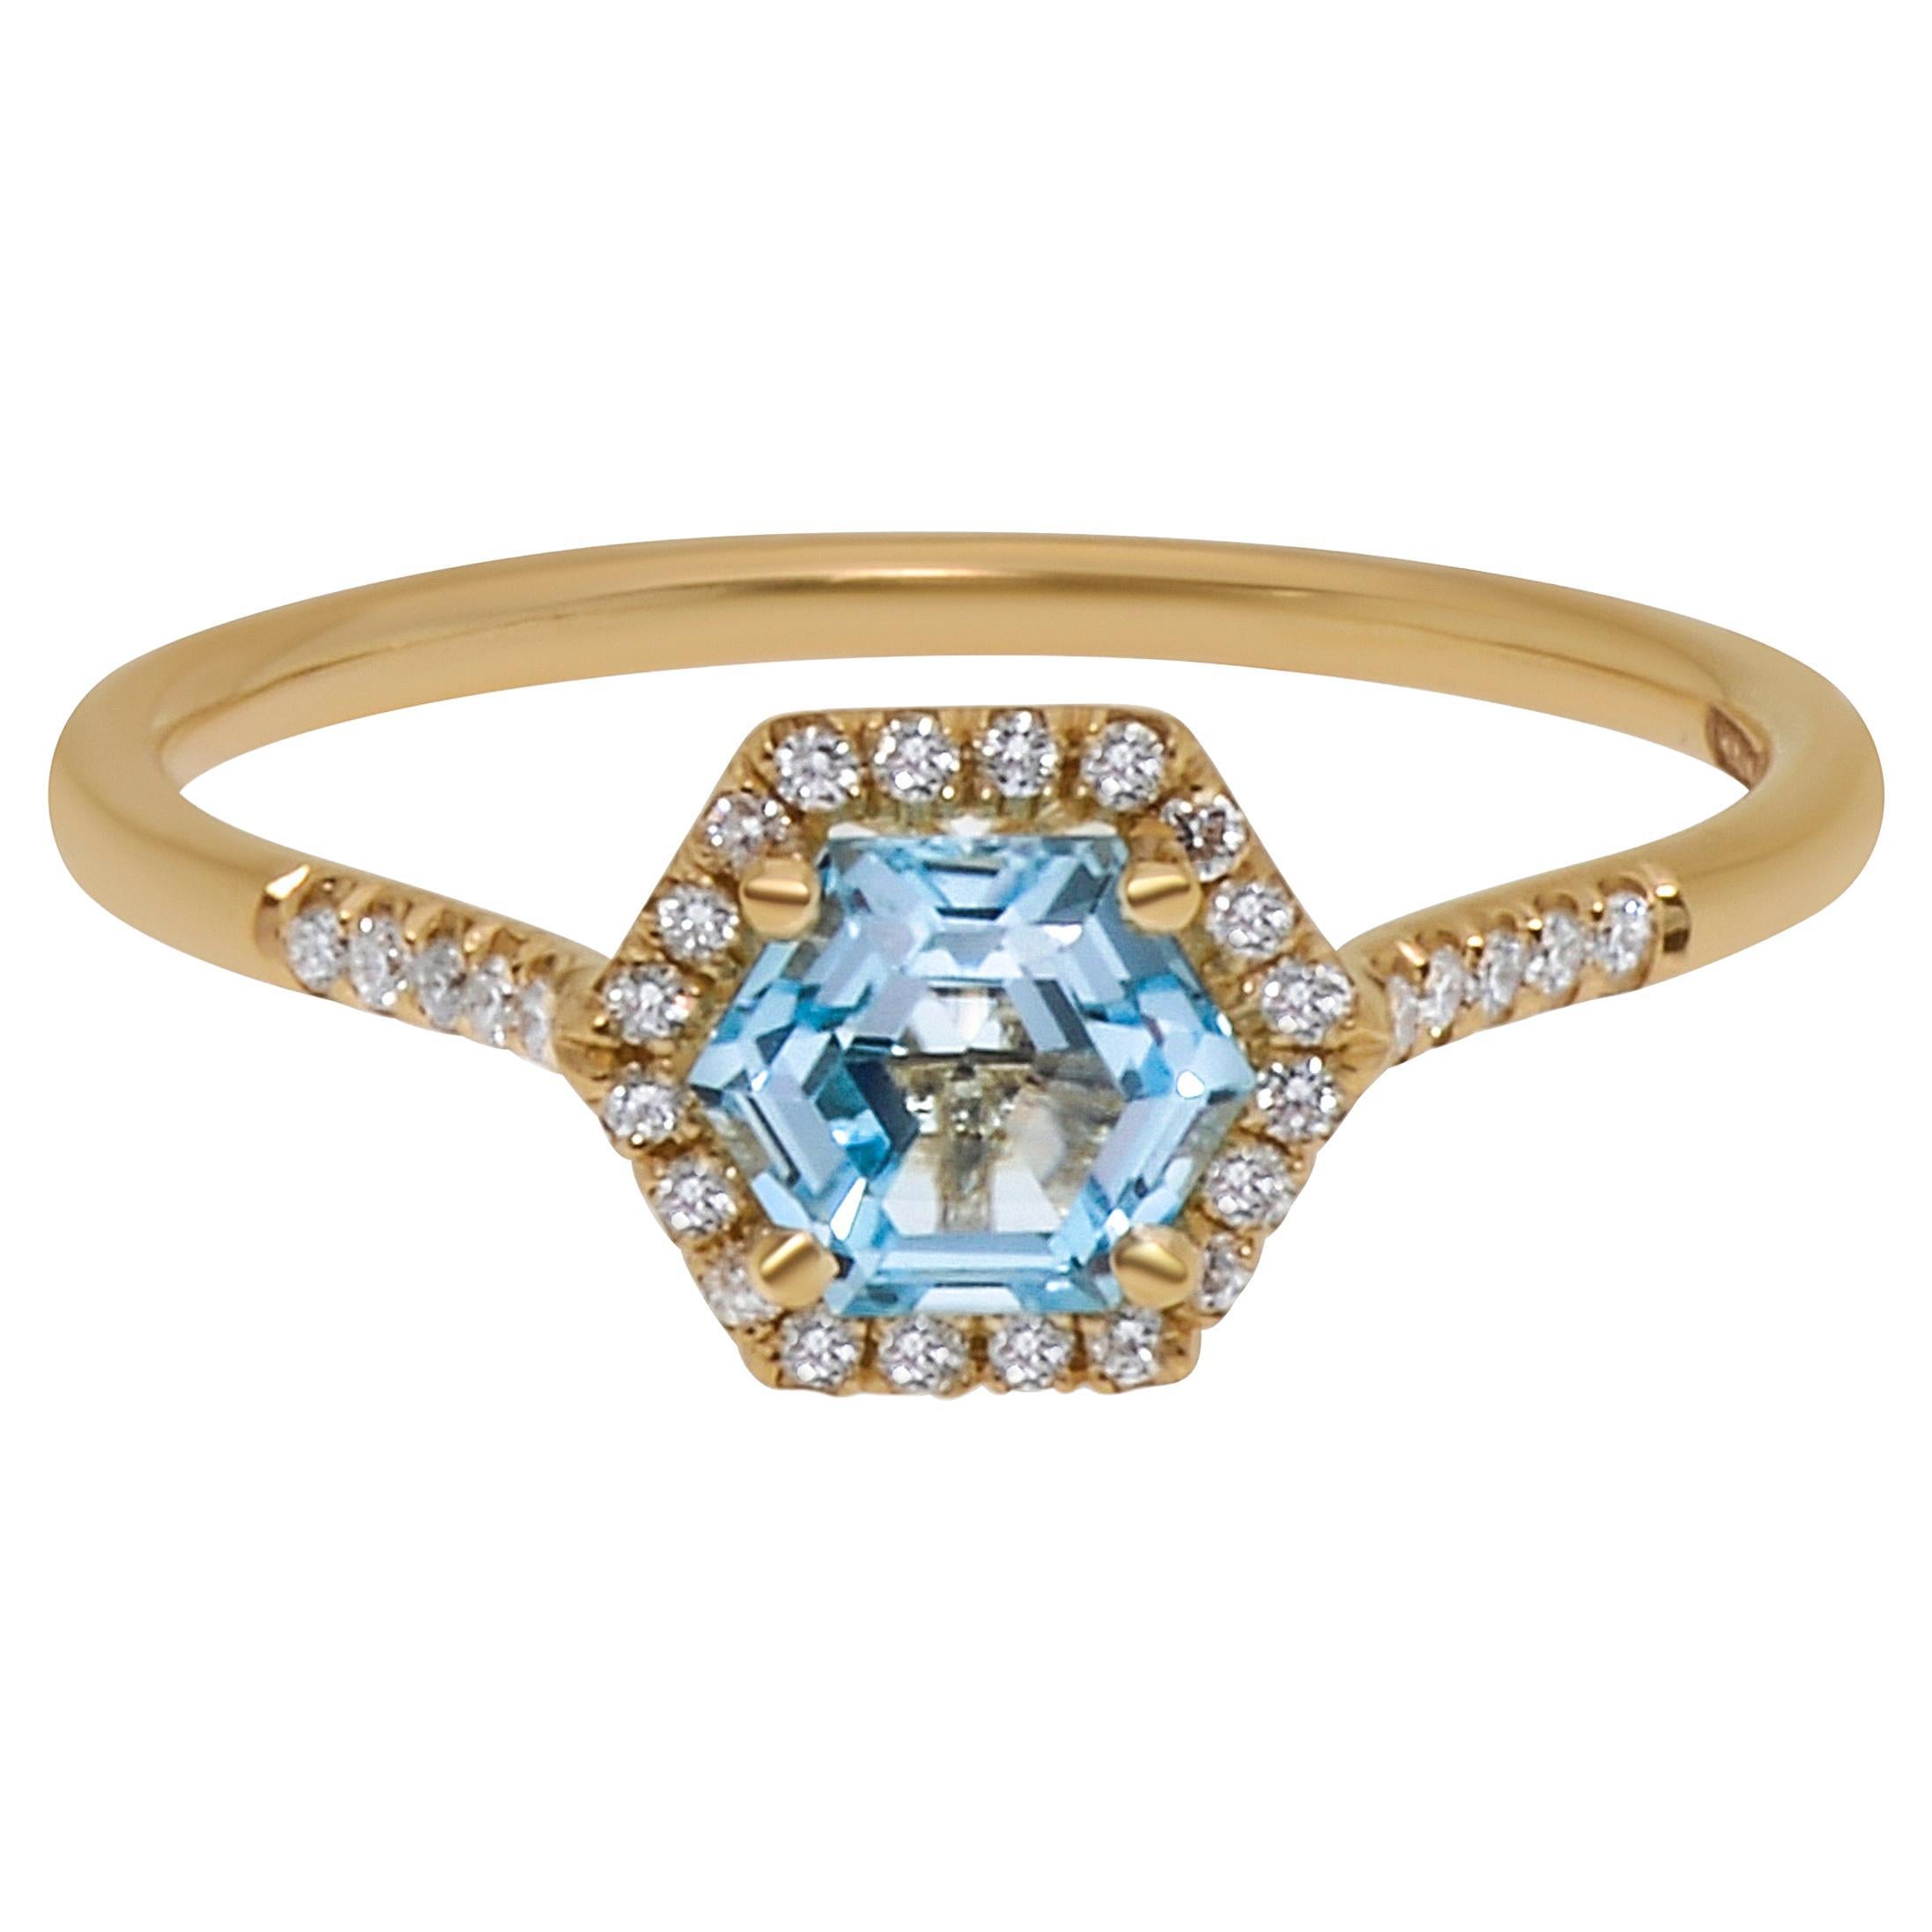 Suzanne Kalan 14K Yellow Gold Diamond & Blue Topaz Ring sz 6.25 For Sale